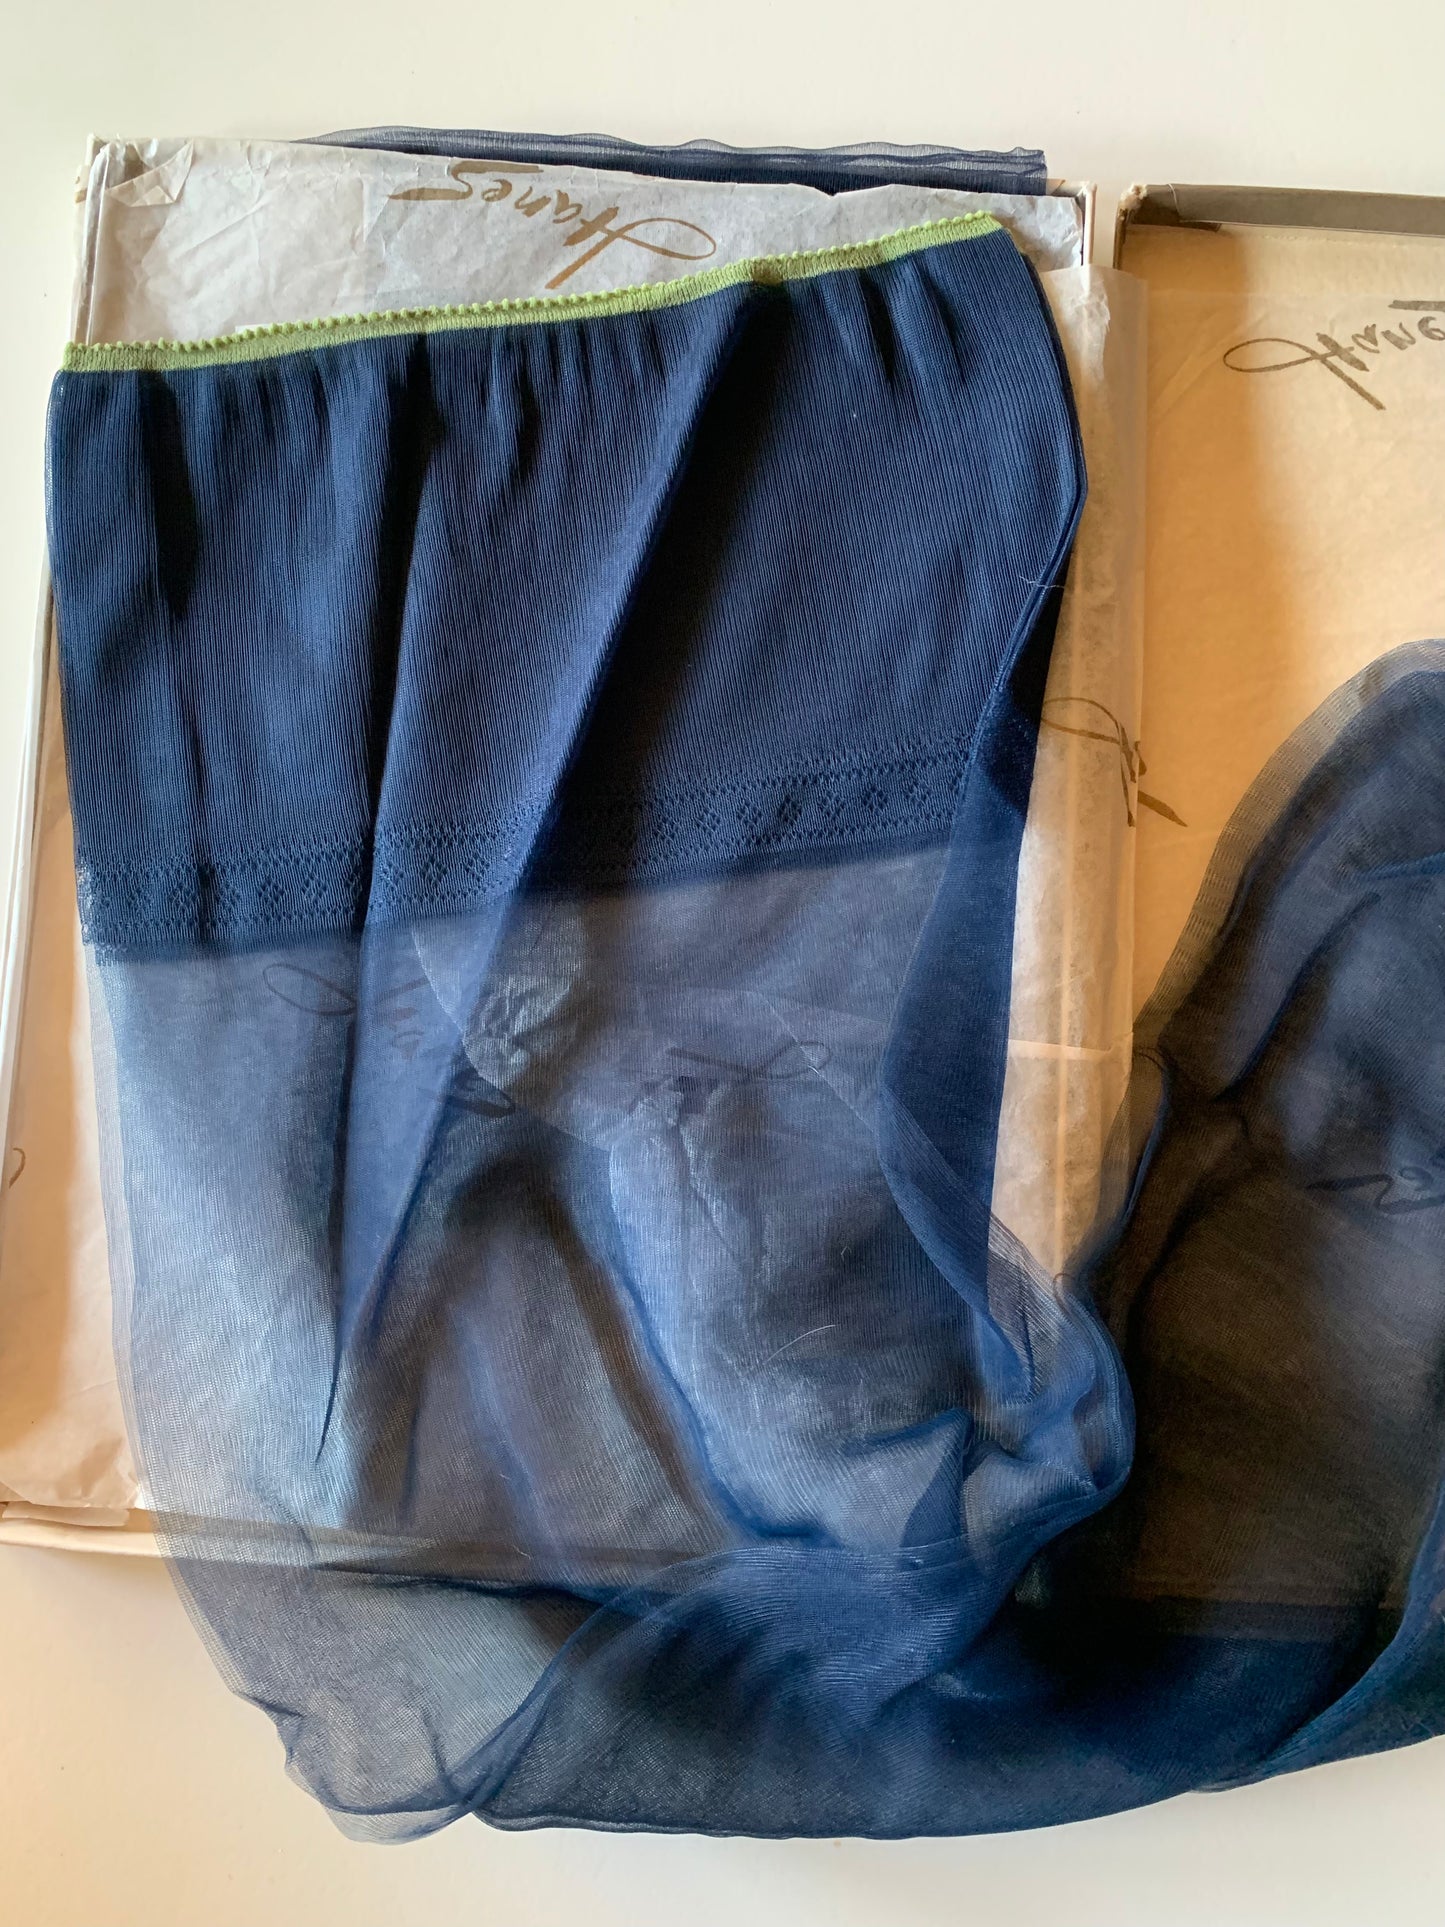 2 Pr Sheer Navy Blue Thigh High Stockings in Box circa 1980s 10.5